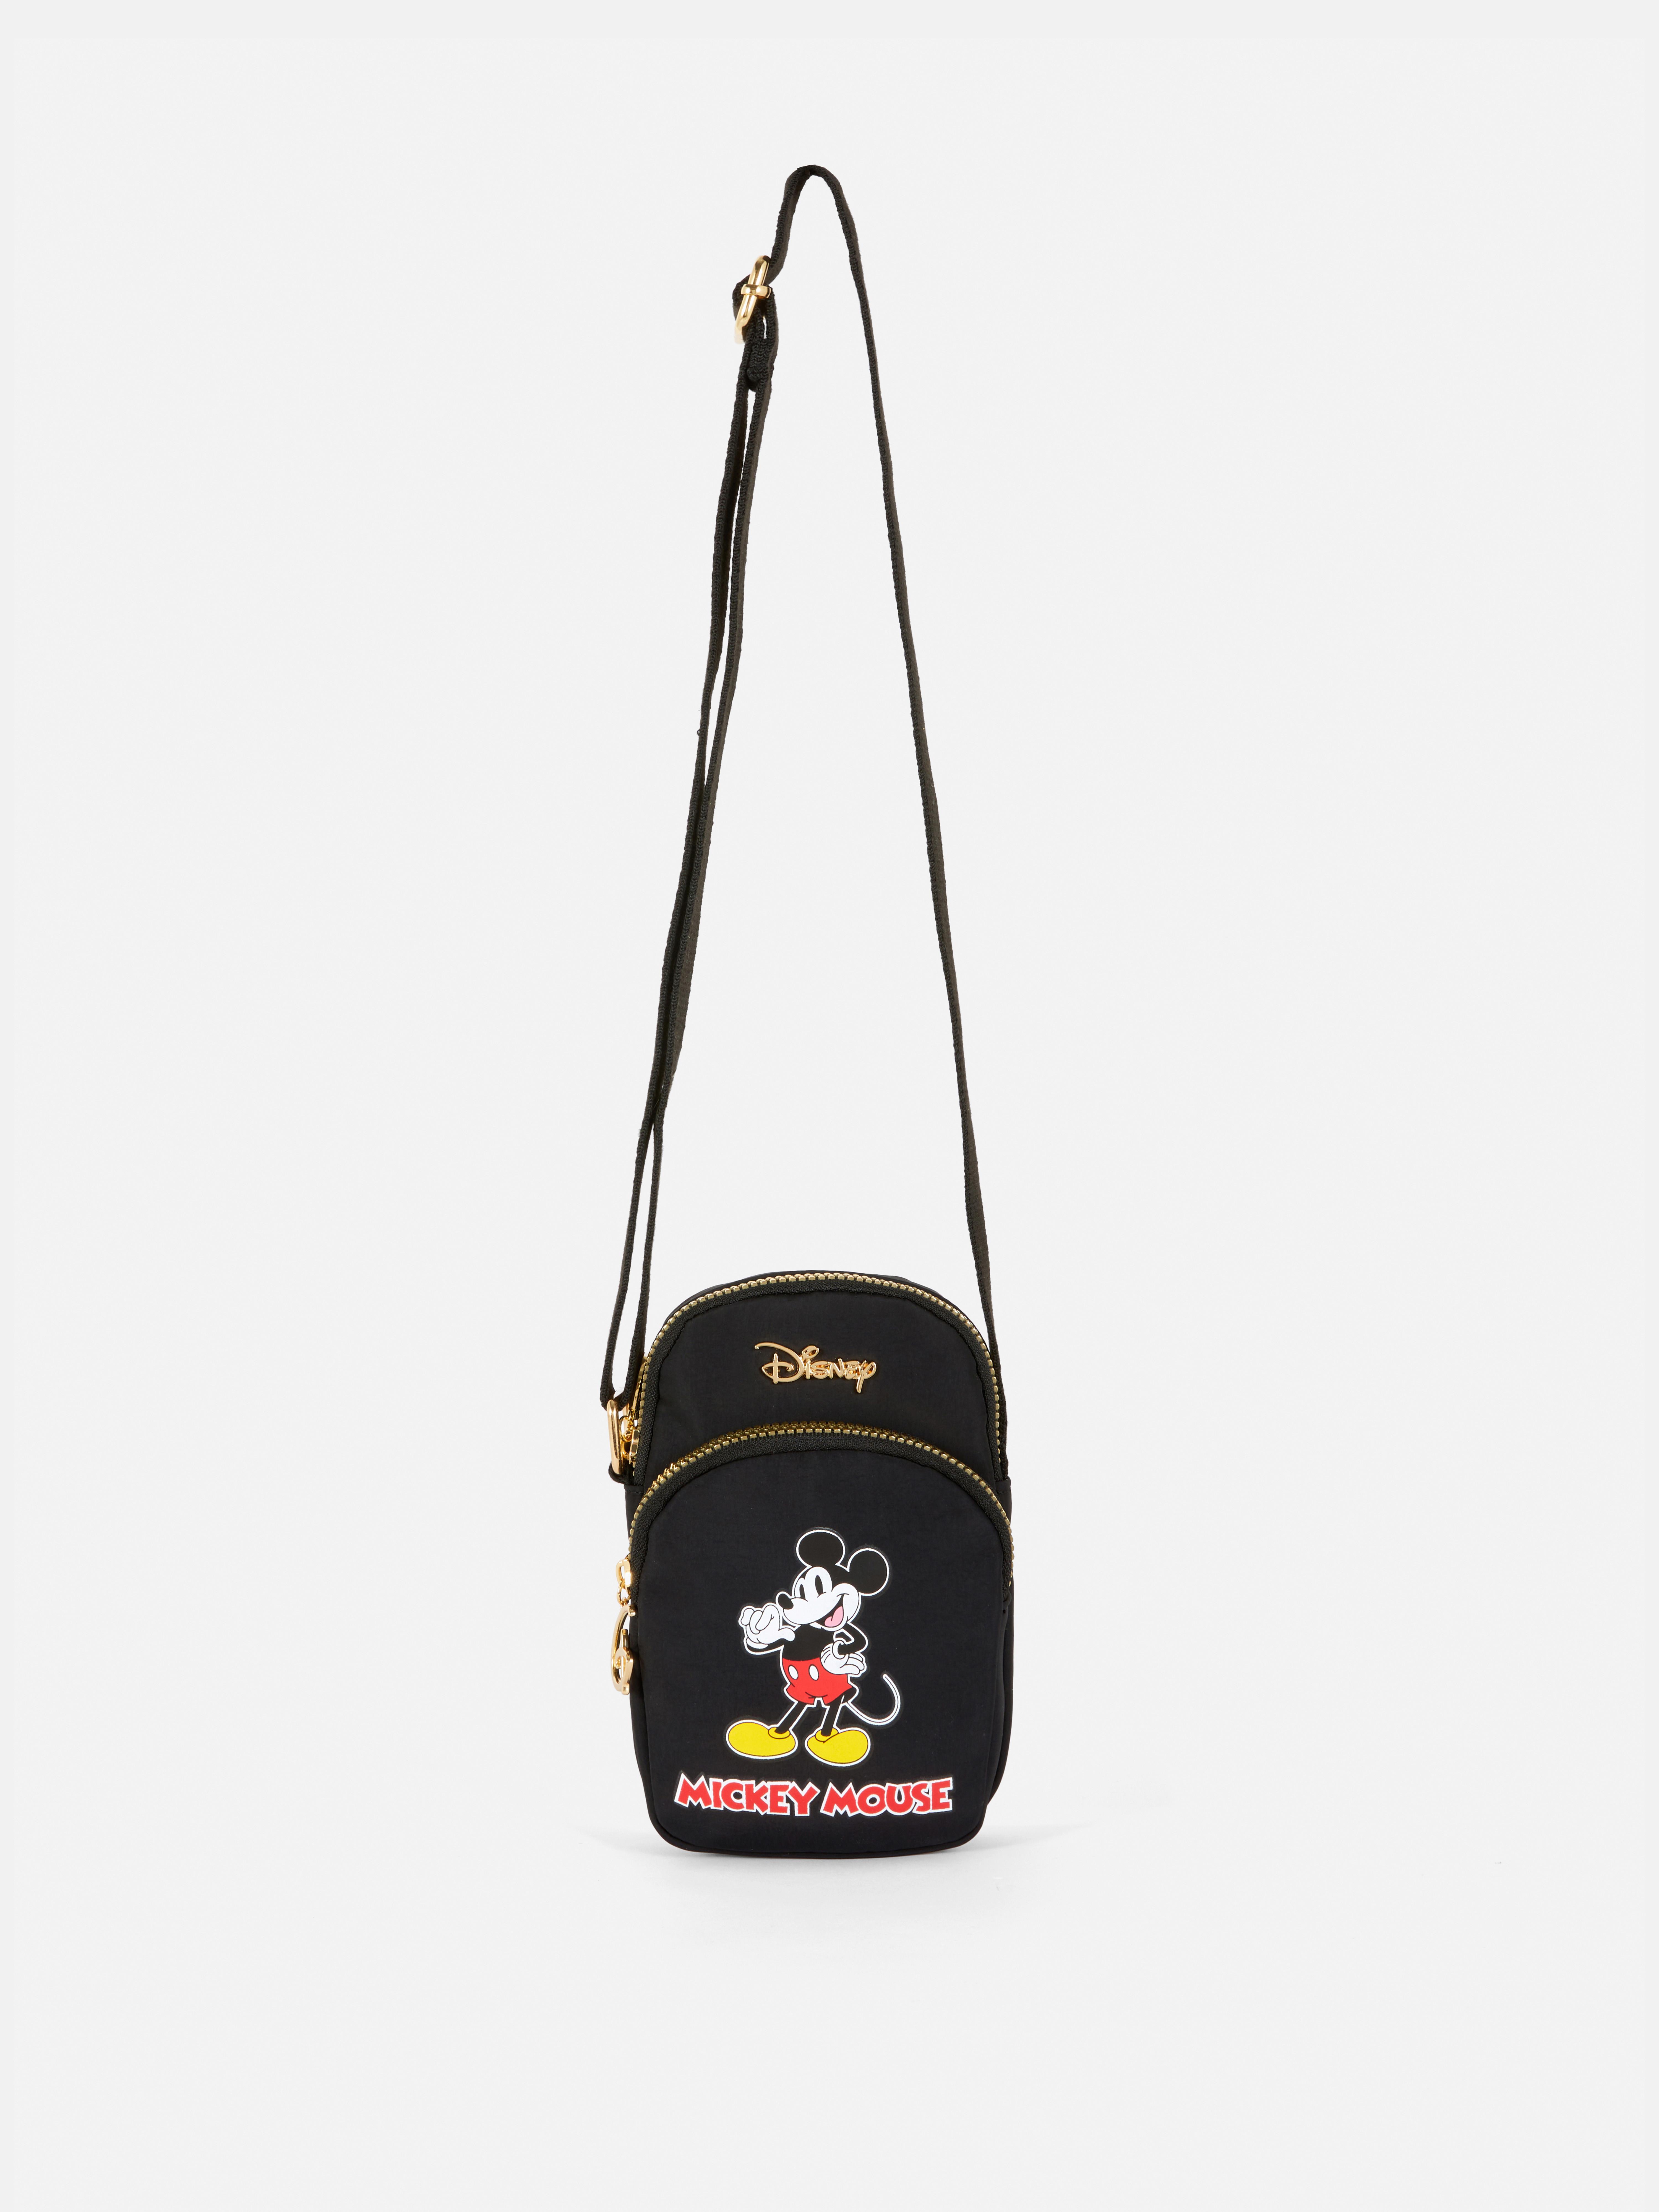 Bolsa telemóvel estampado Disney Mickey Mouse